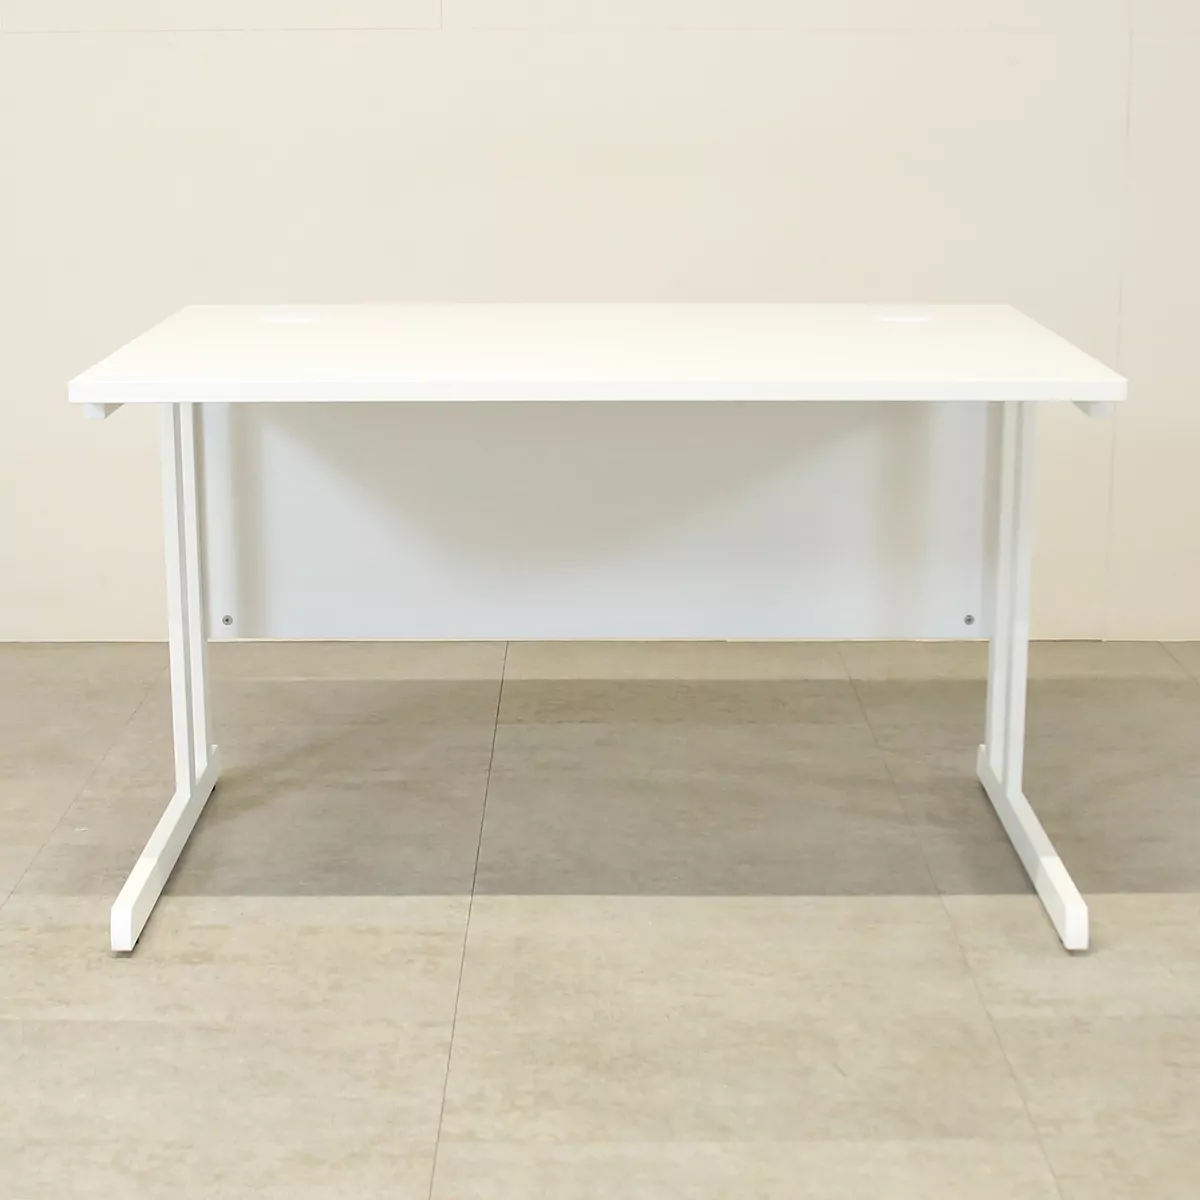 Optima C Cantilever Desk 1200wx800dx720h - White - Brand New